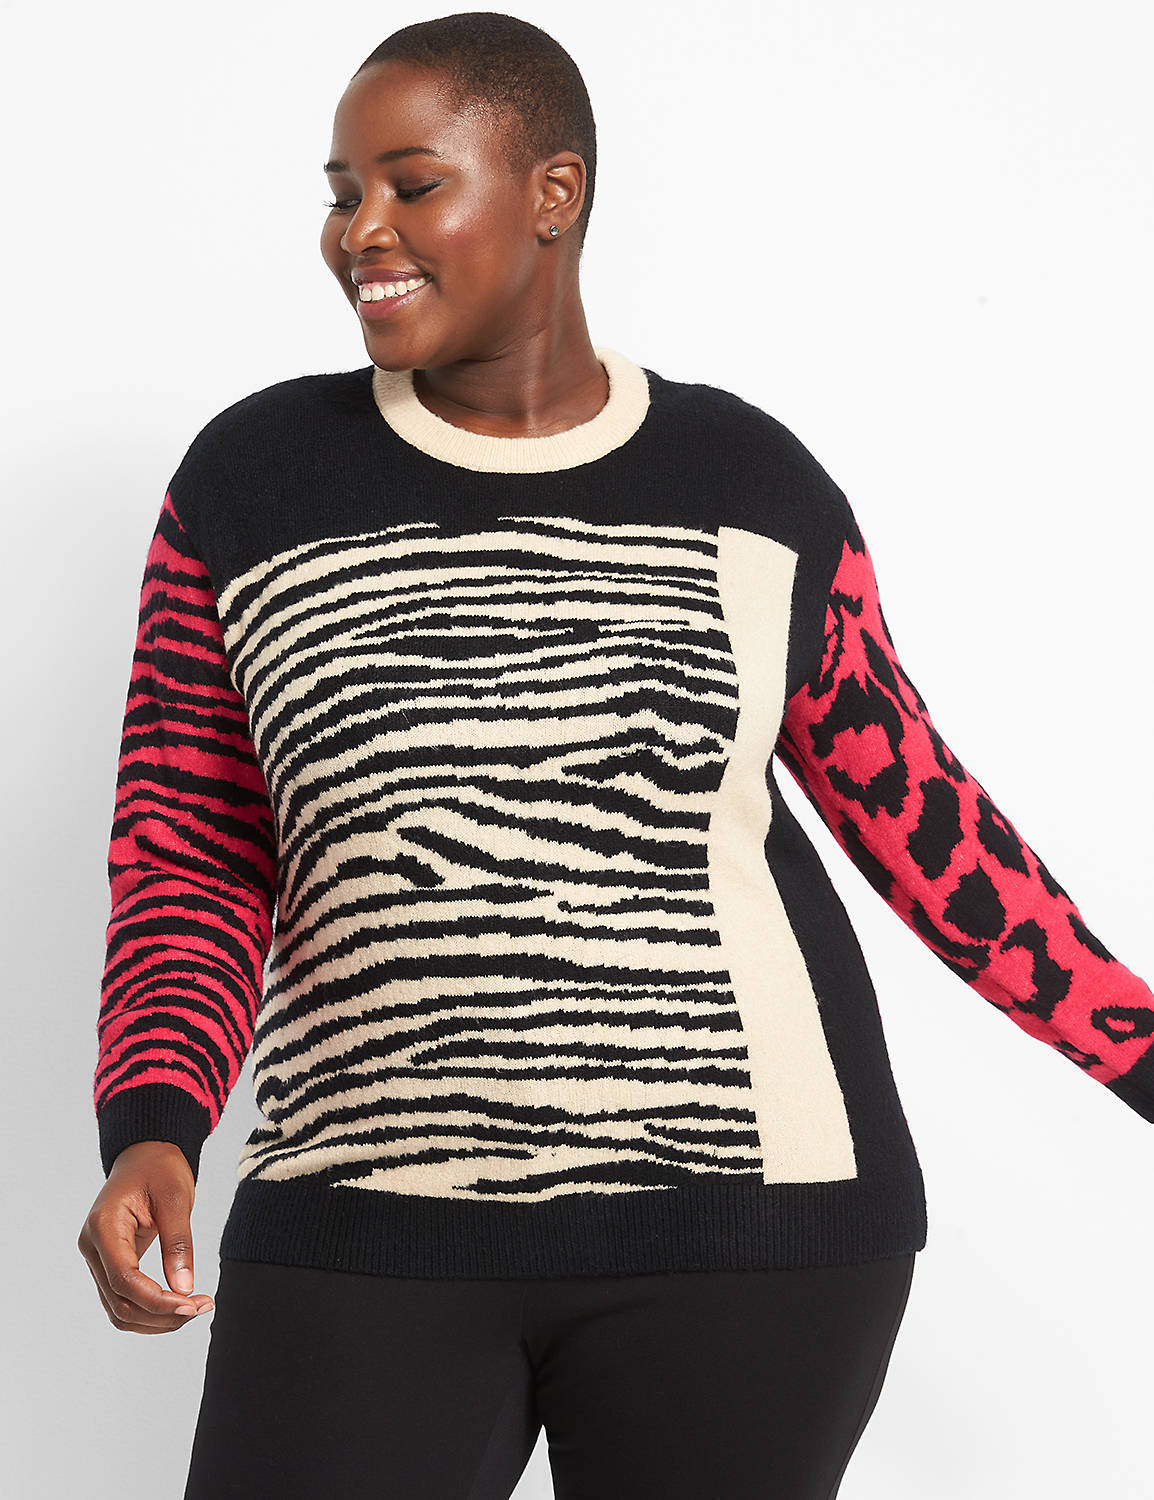 Animal-Print Jacquard Sweater Product Image 1